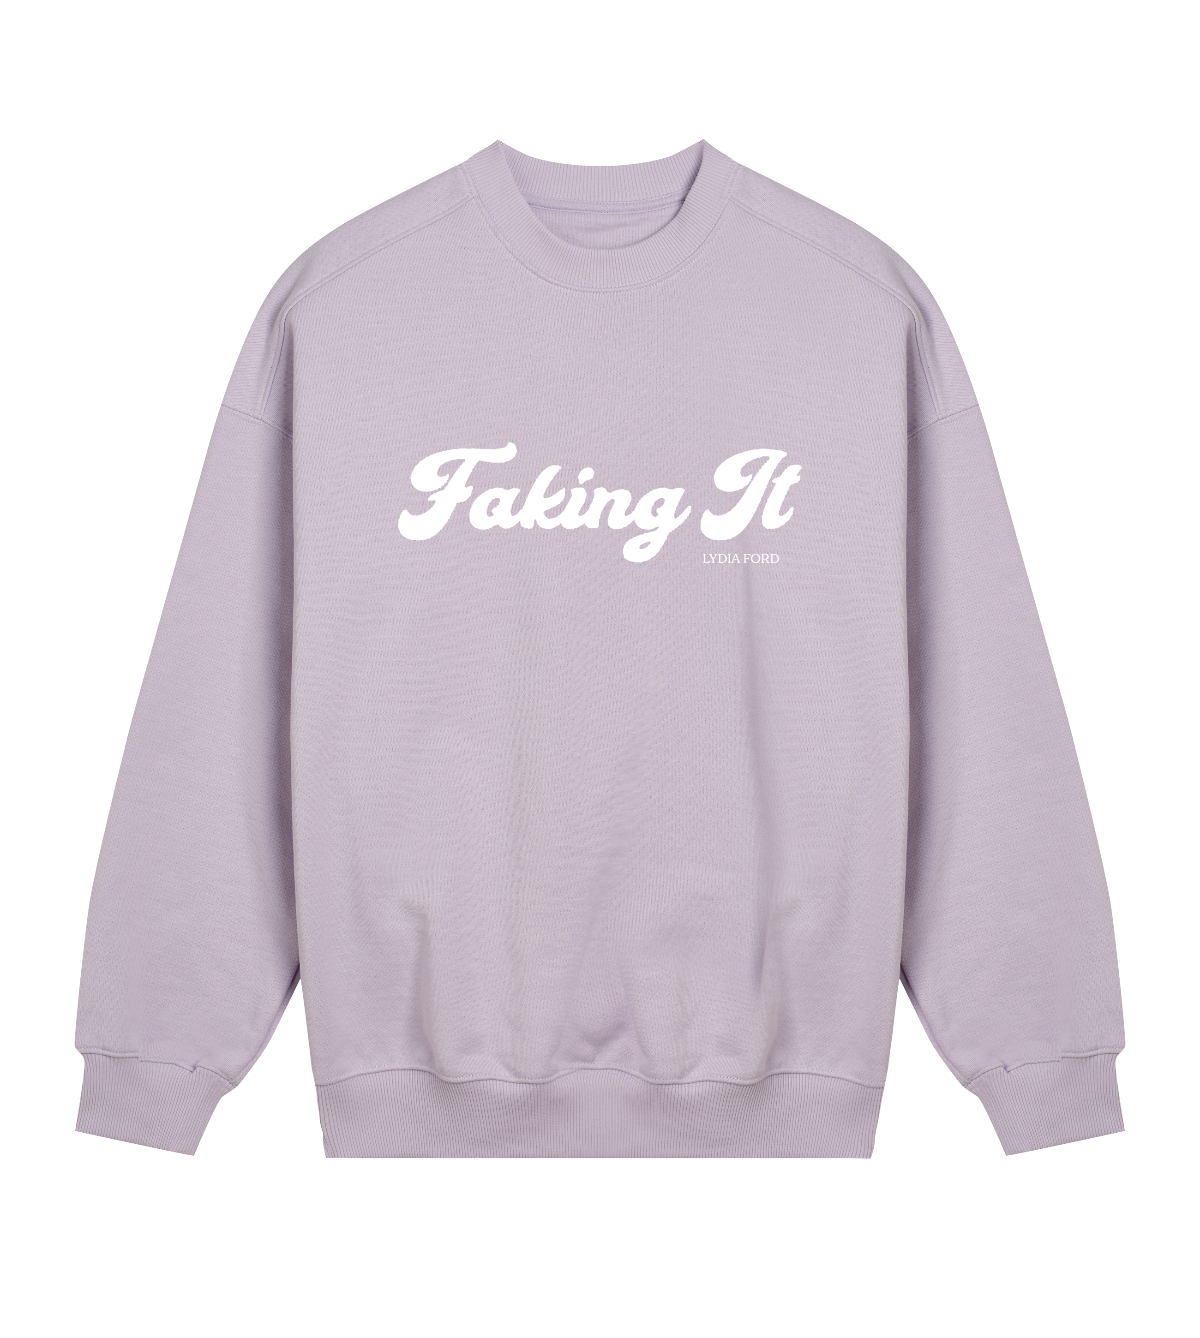 Faking It - Oversized Women's Sweater (3 Colours)